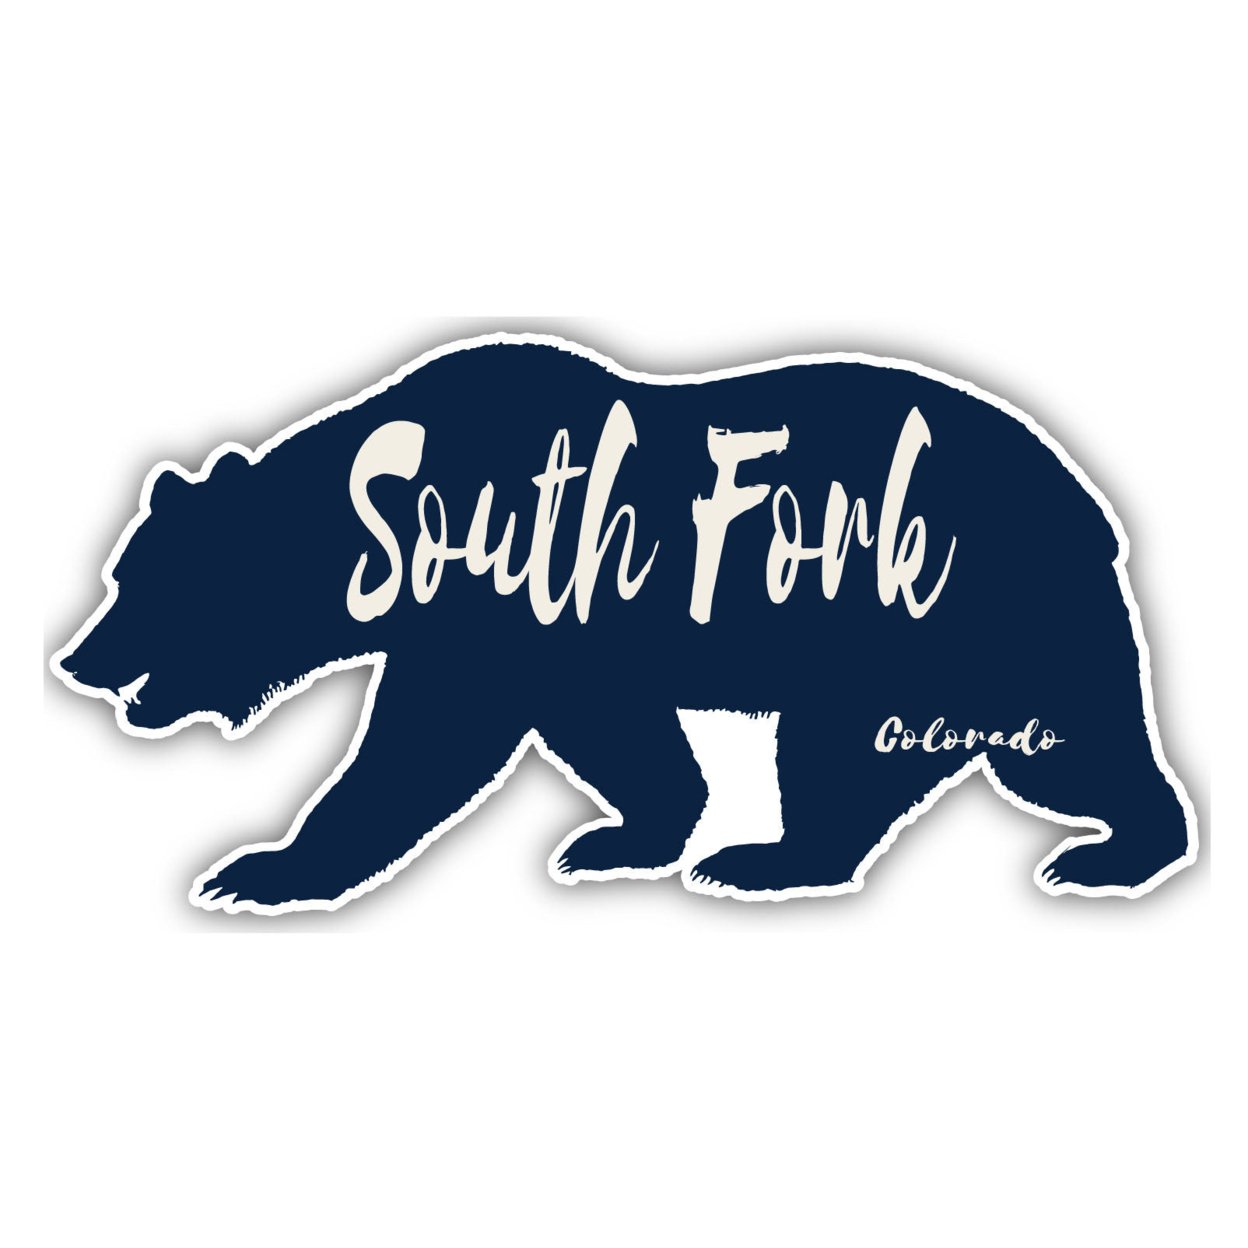 South Fork Colorado Souvenir Decorative Stickers (Choose Theme And Size) - Single Unit, 2-Inch, Bear